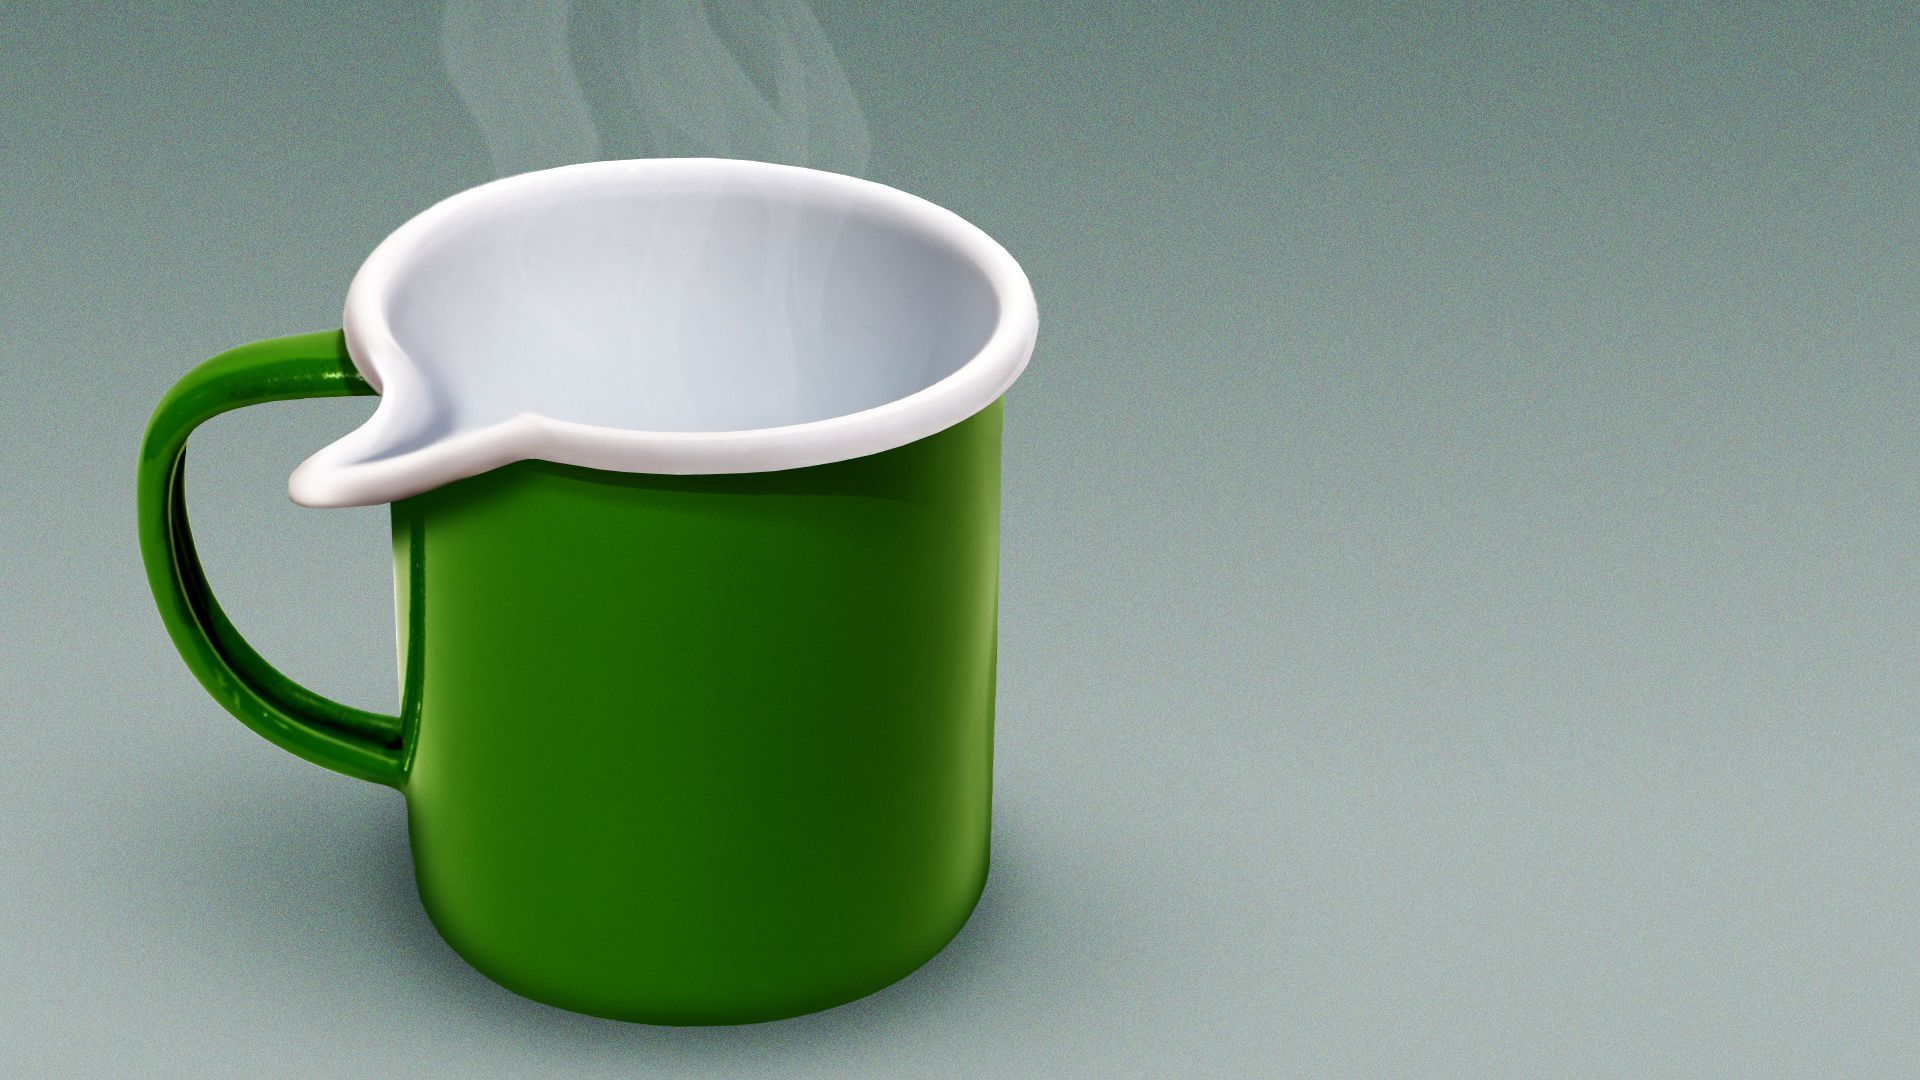 Illustration of a coffee mug with the rim shaped like a speech bubble